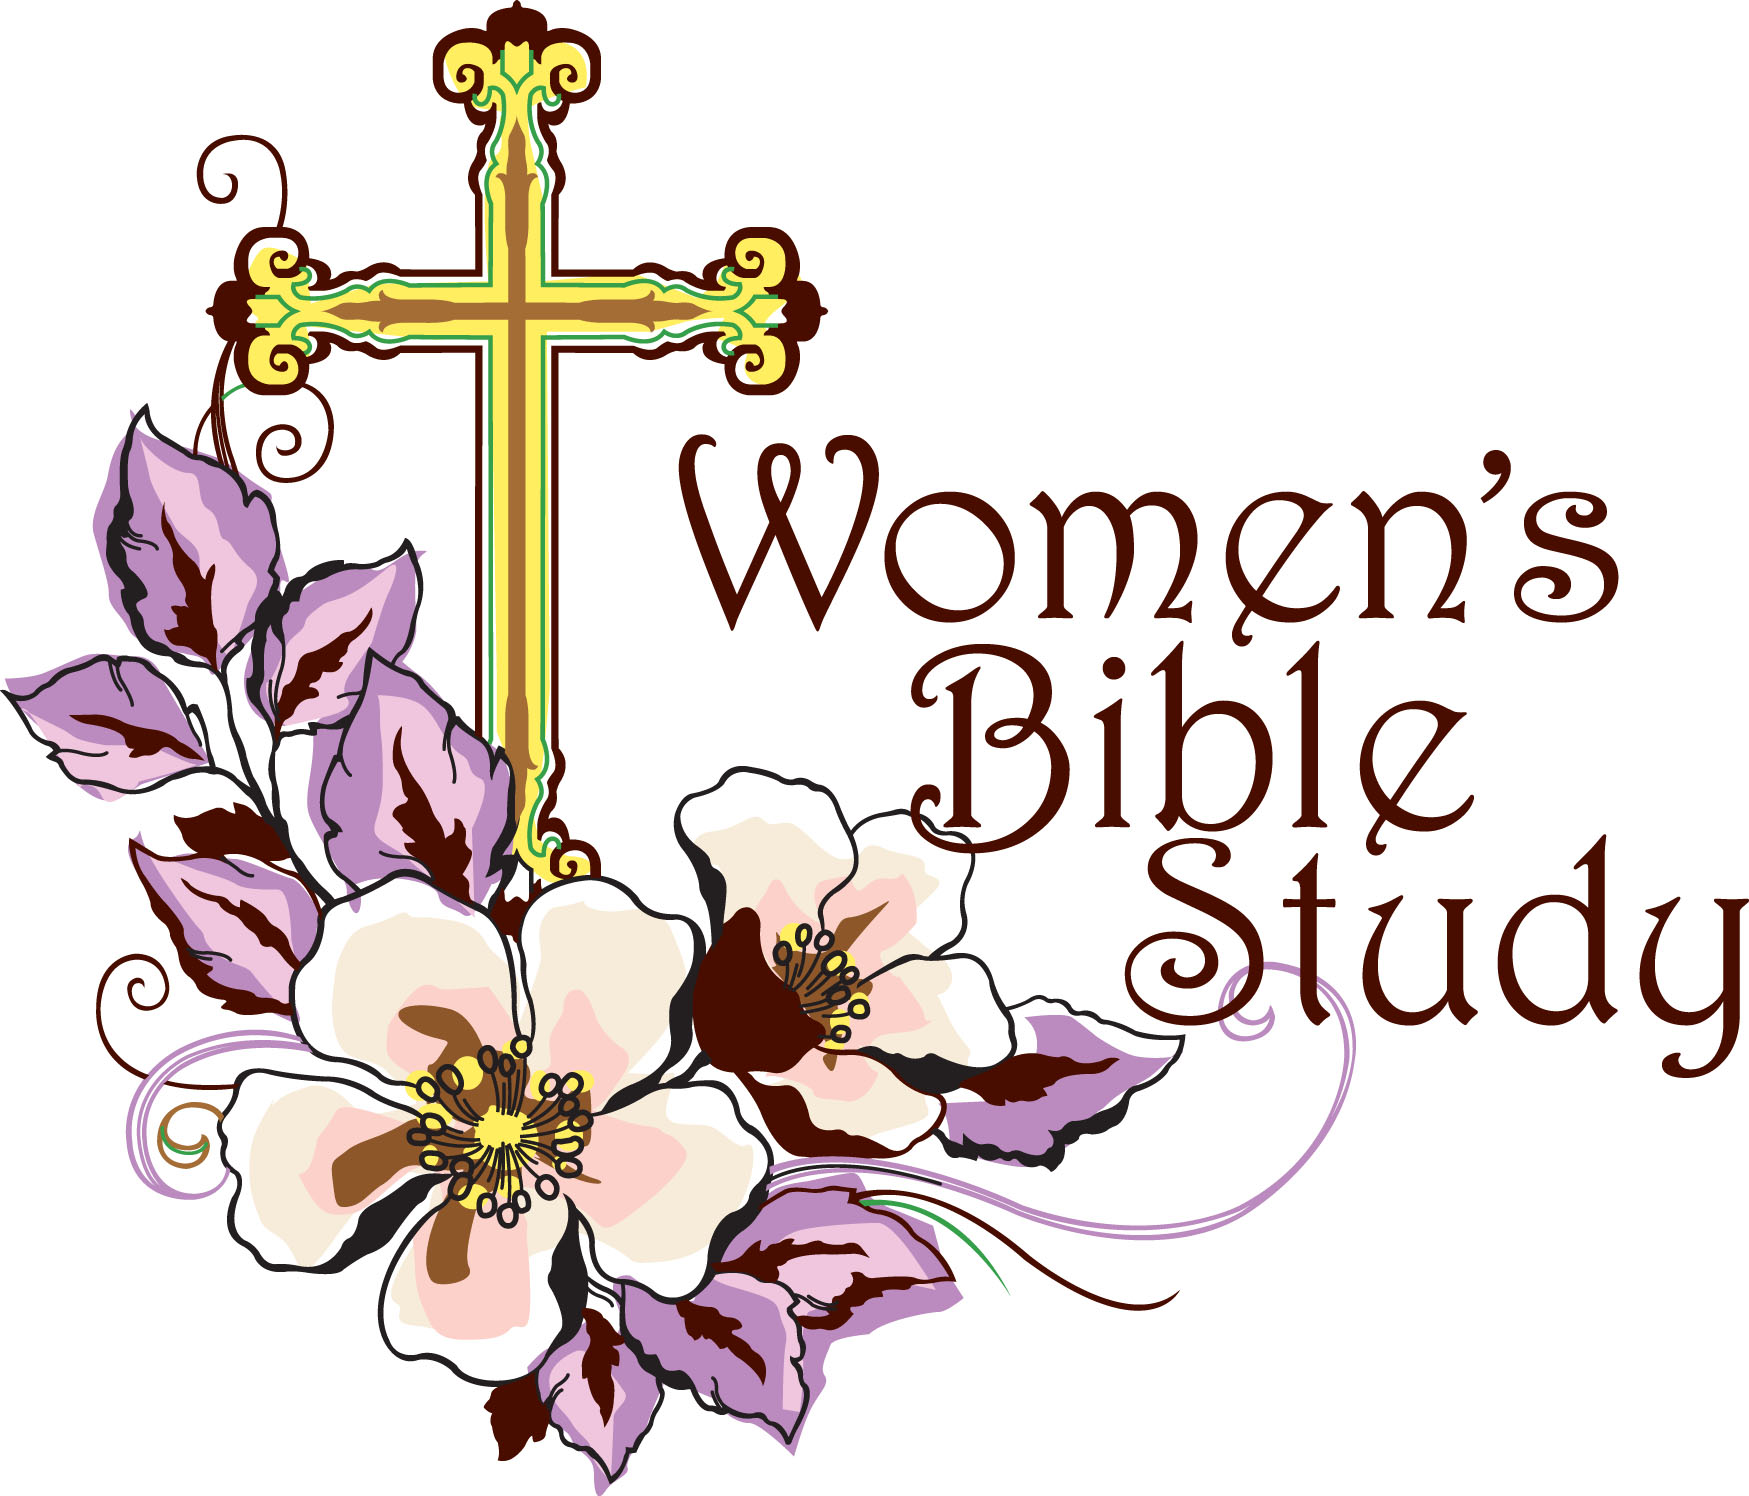 Women's Bible Study image